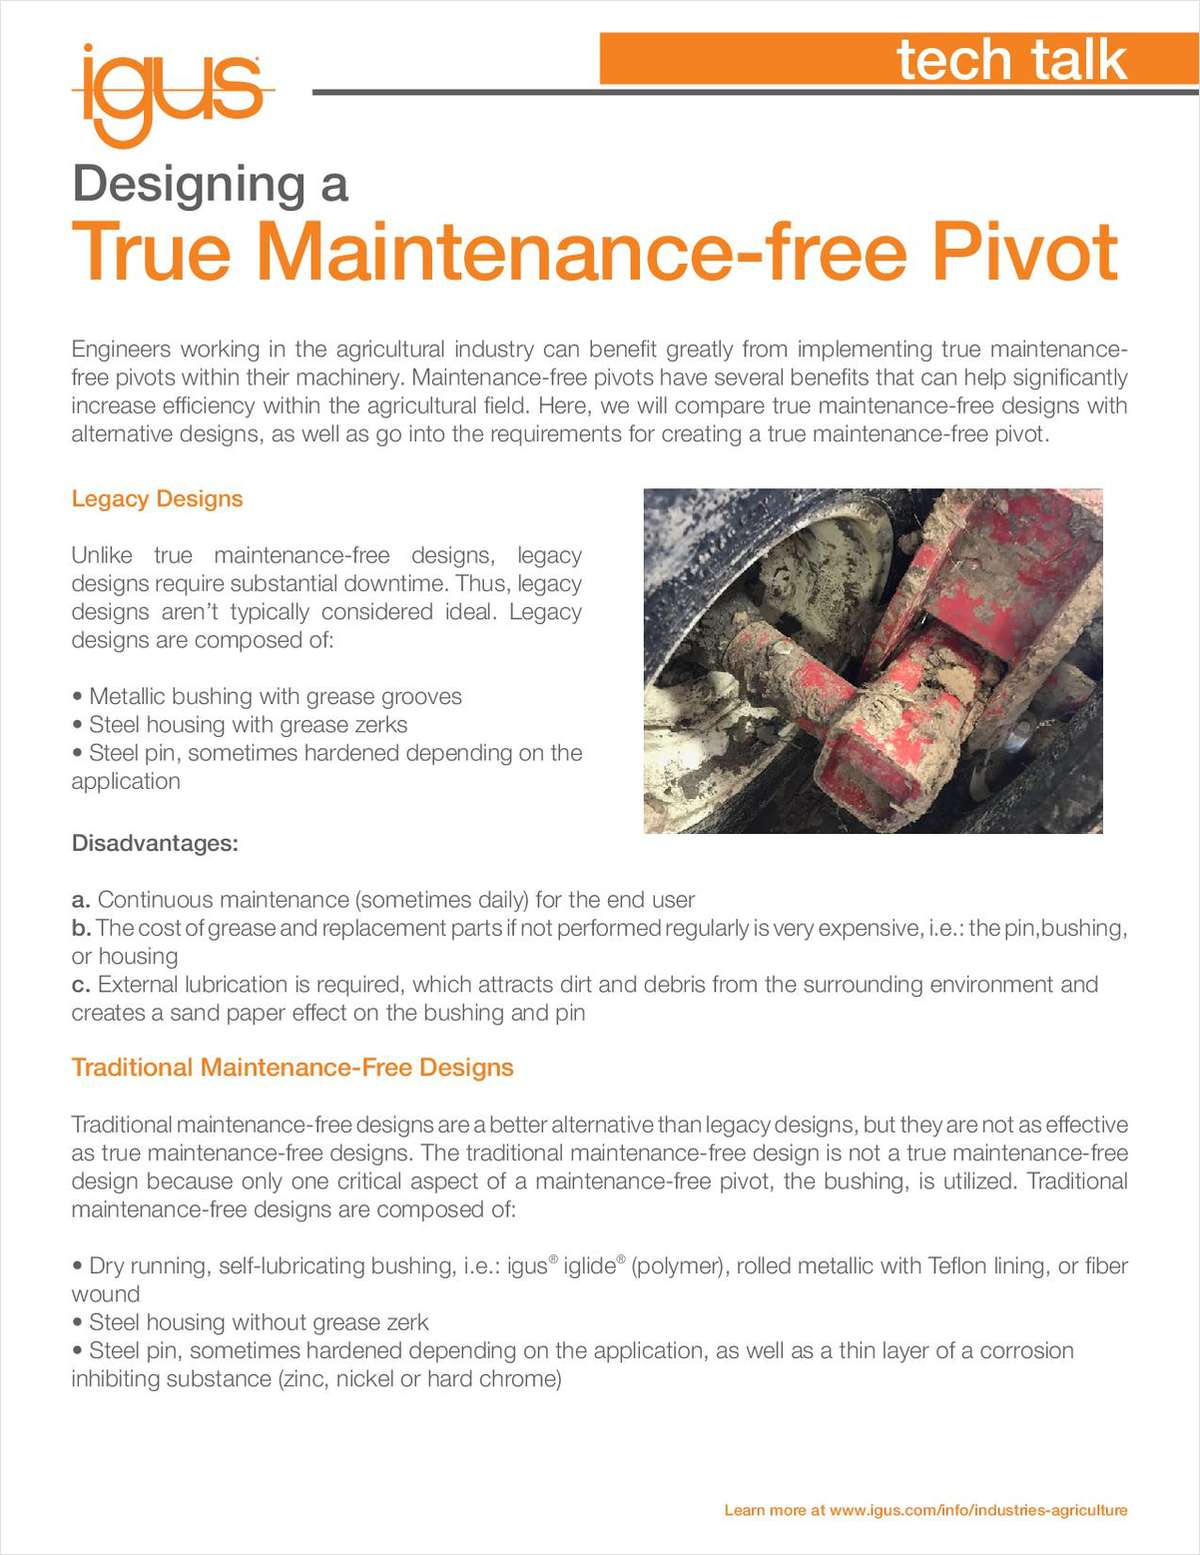 Designing a true maintenance-free pivot